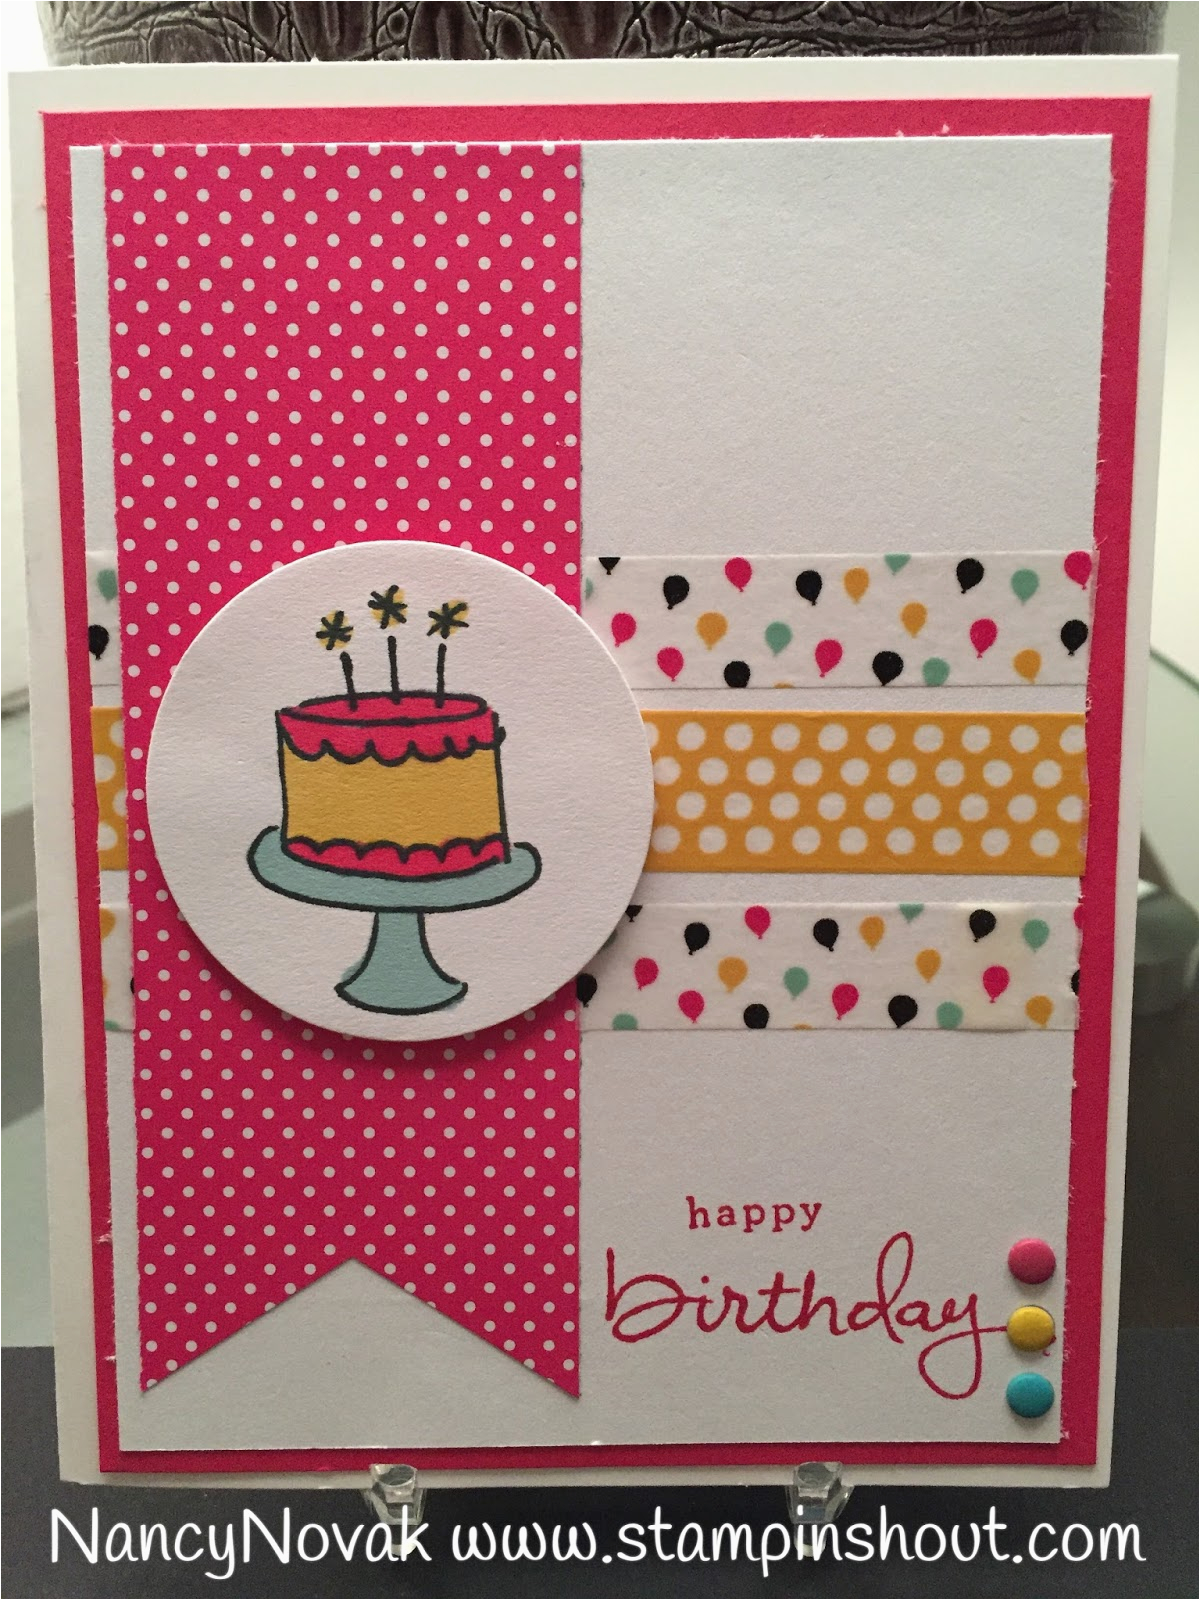 Gmail Birthday Cards Stampinshout Nancyannnovak Gmail Com Endless Birthday Wishes